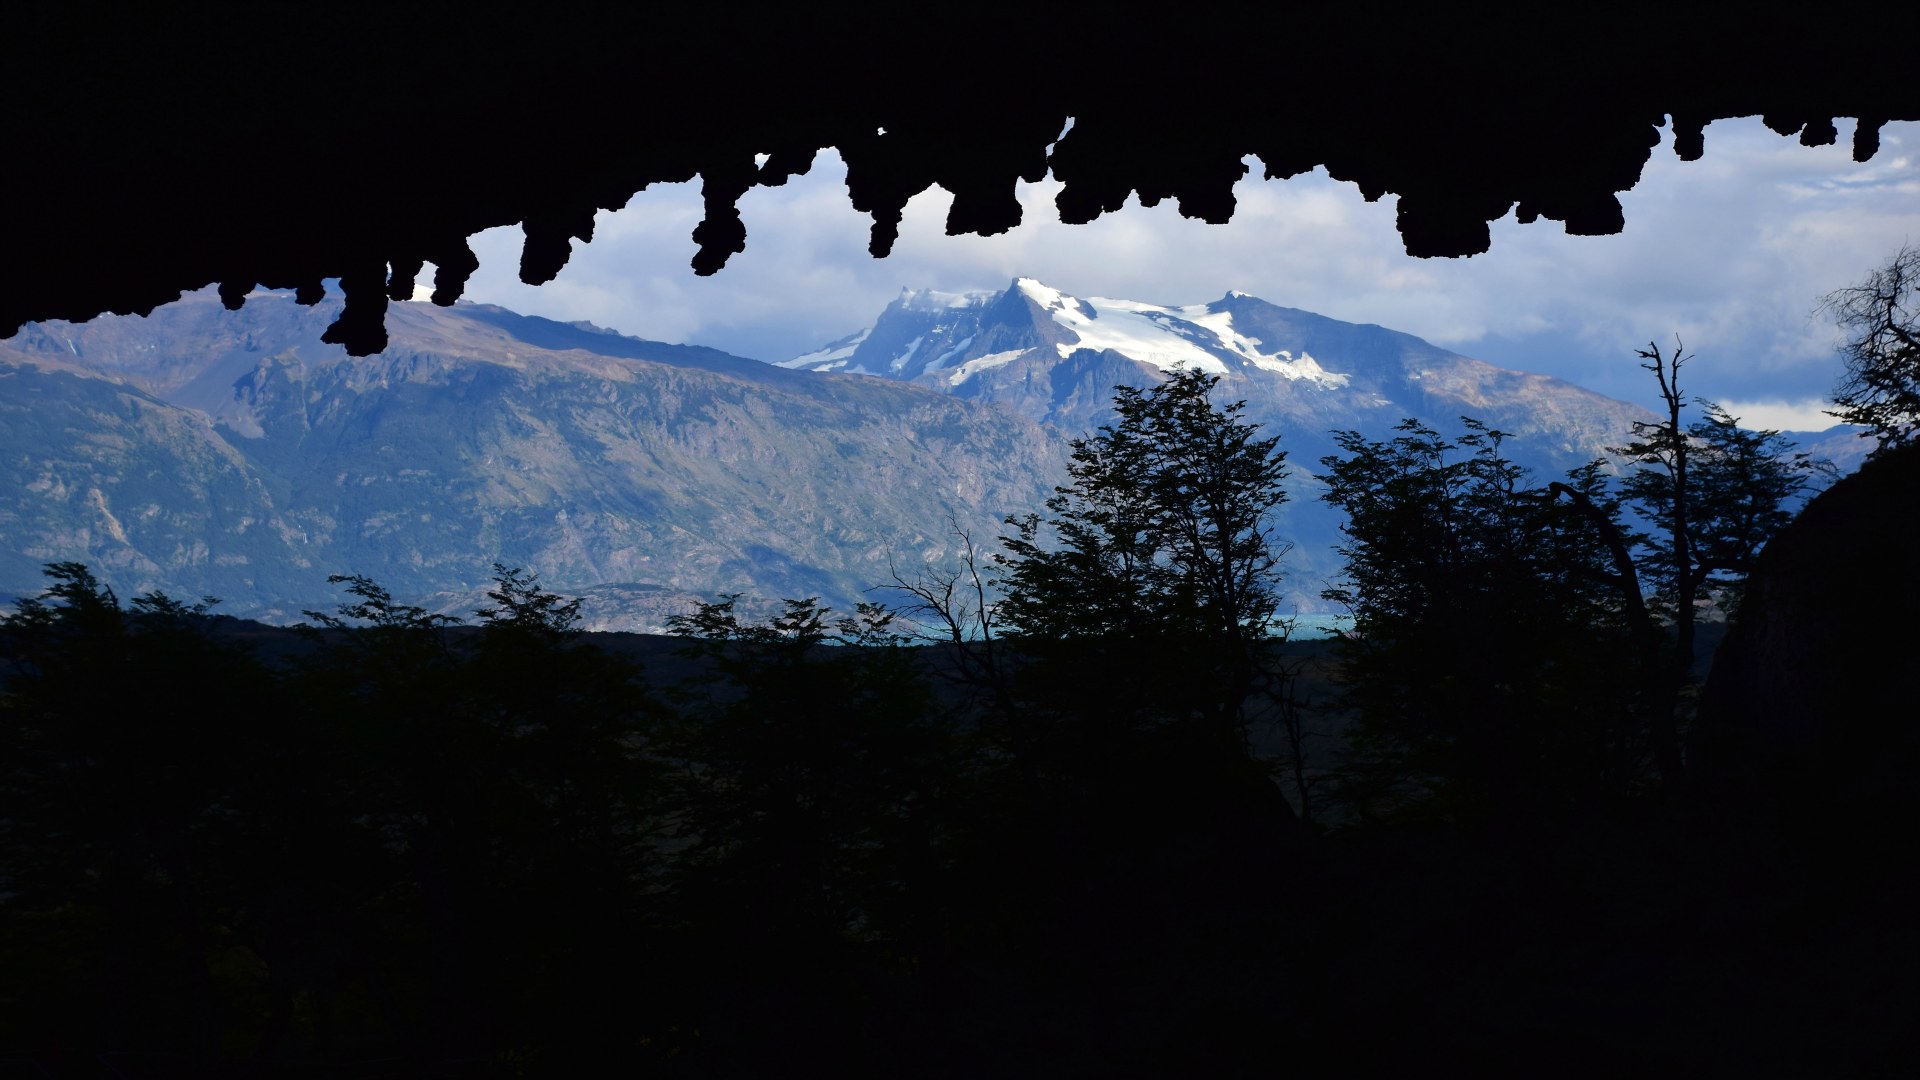 View from Cueva del Milodon near Puerto Natales